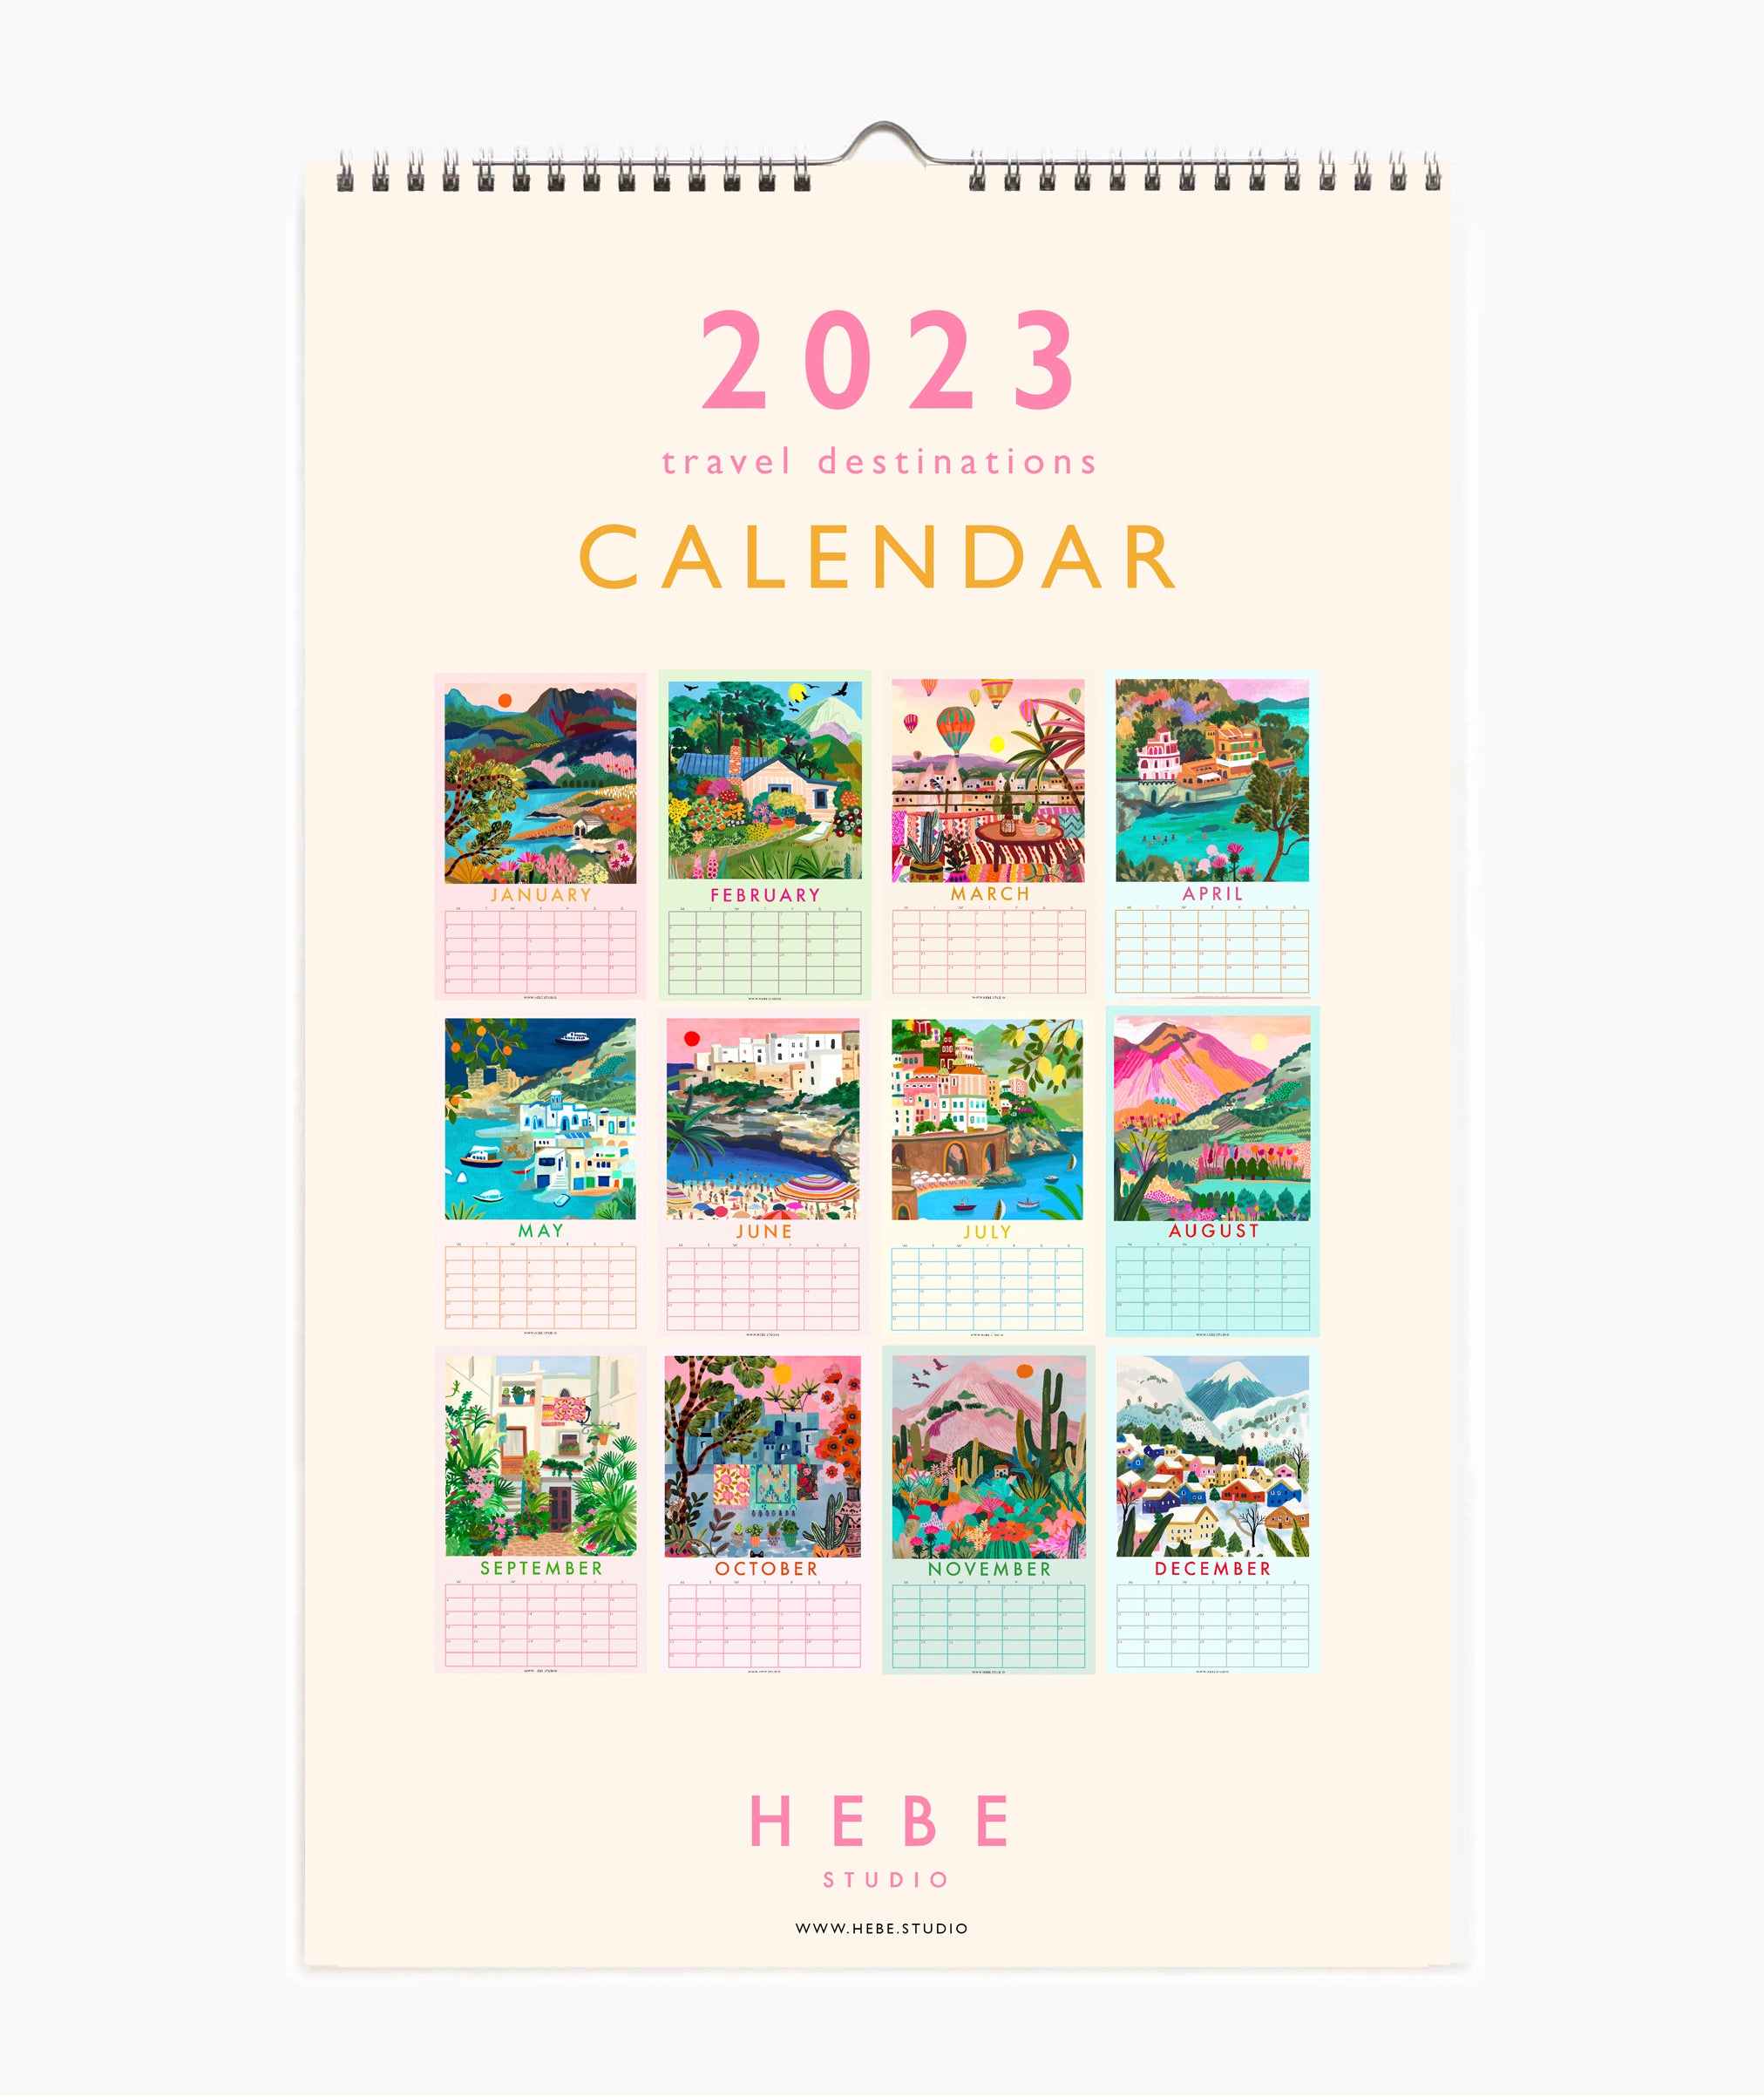 2023 Travel Destinations Calendar